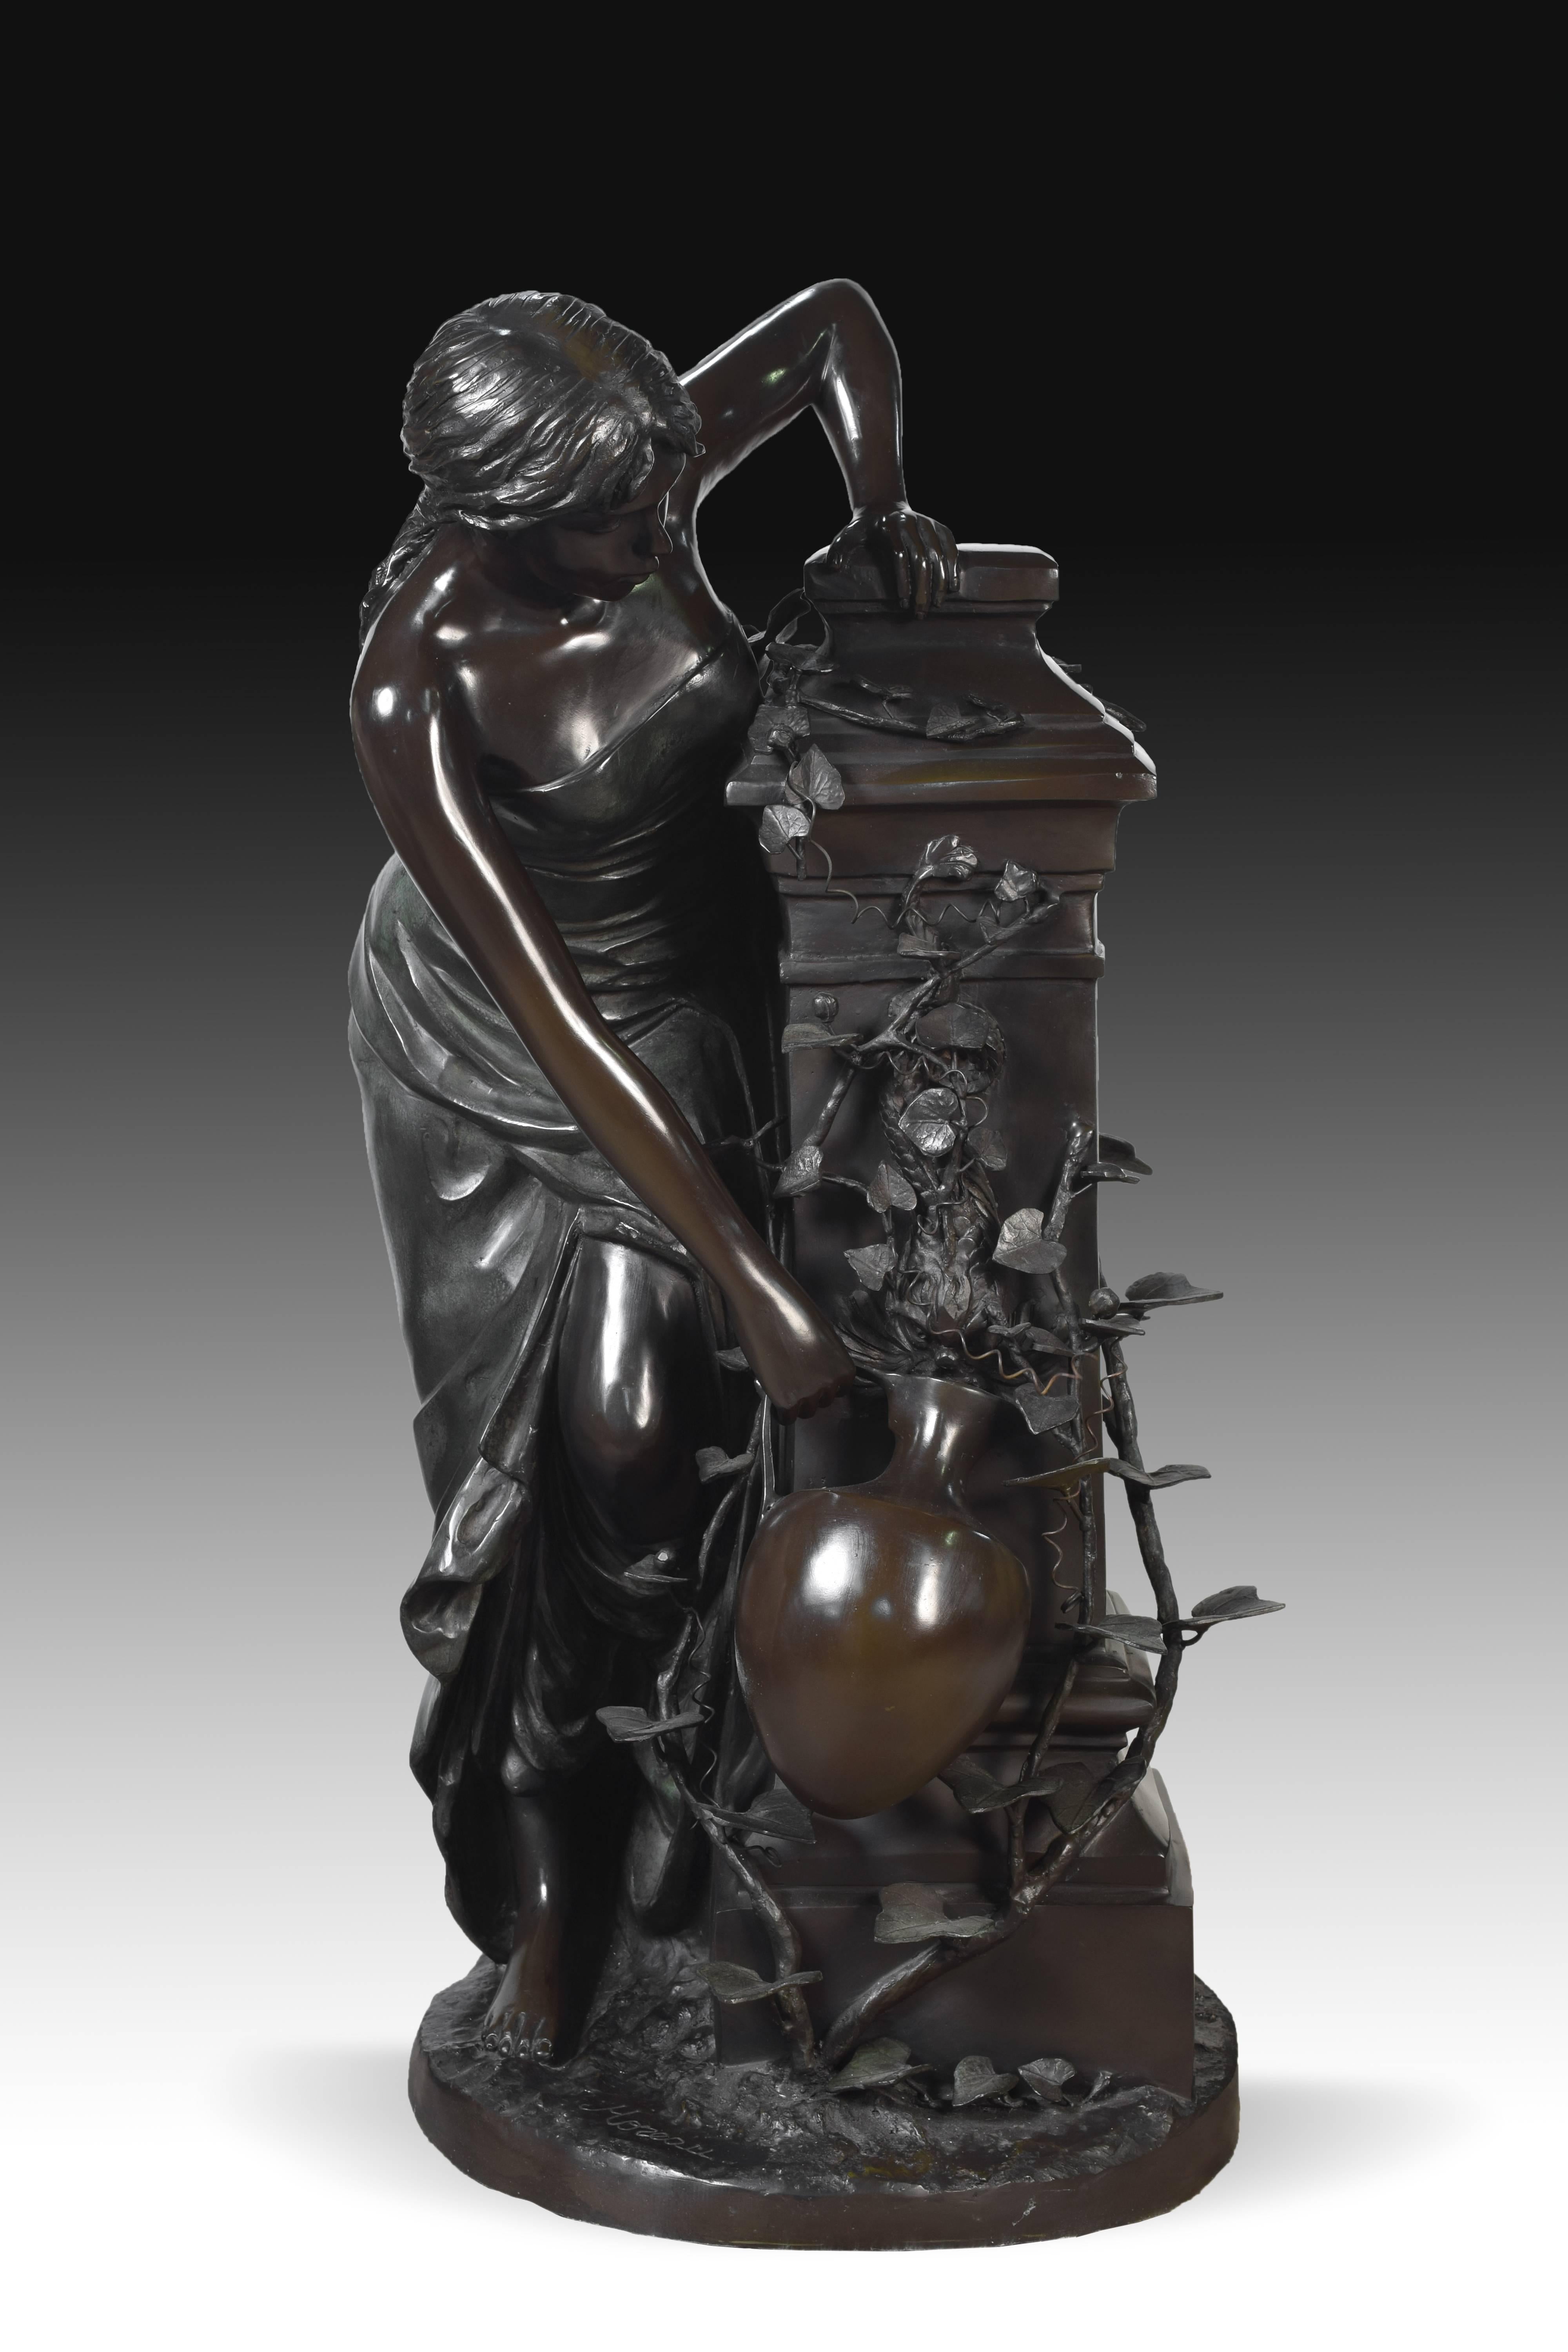 Bronze sculpture after models from Paul-armand Bayard De La Vingtrie (1846-1900) (“La Source”).
Bronze casting to lost wax.
It is based on 